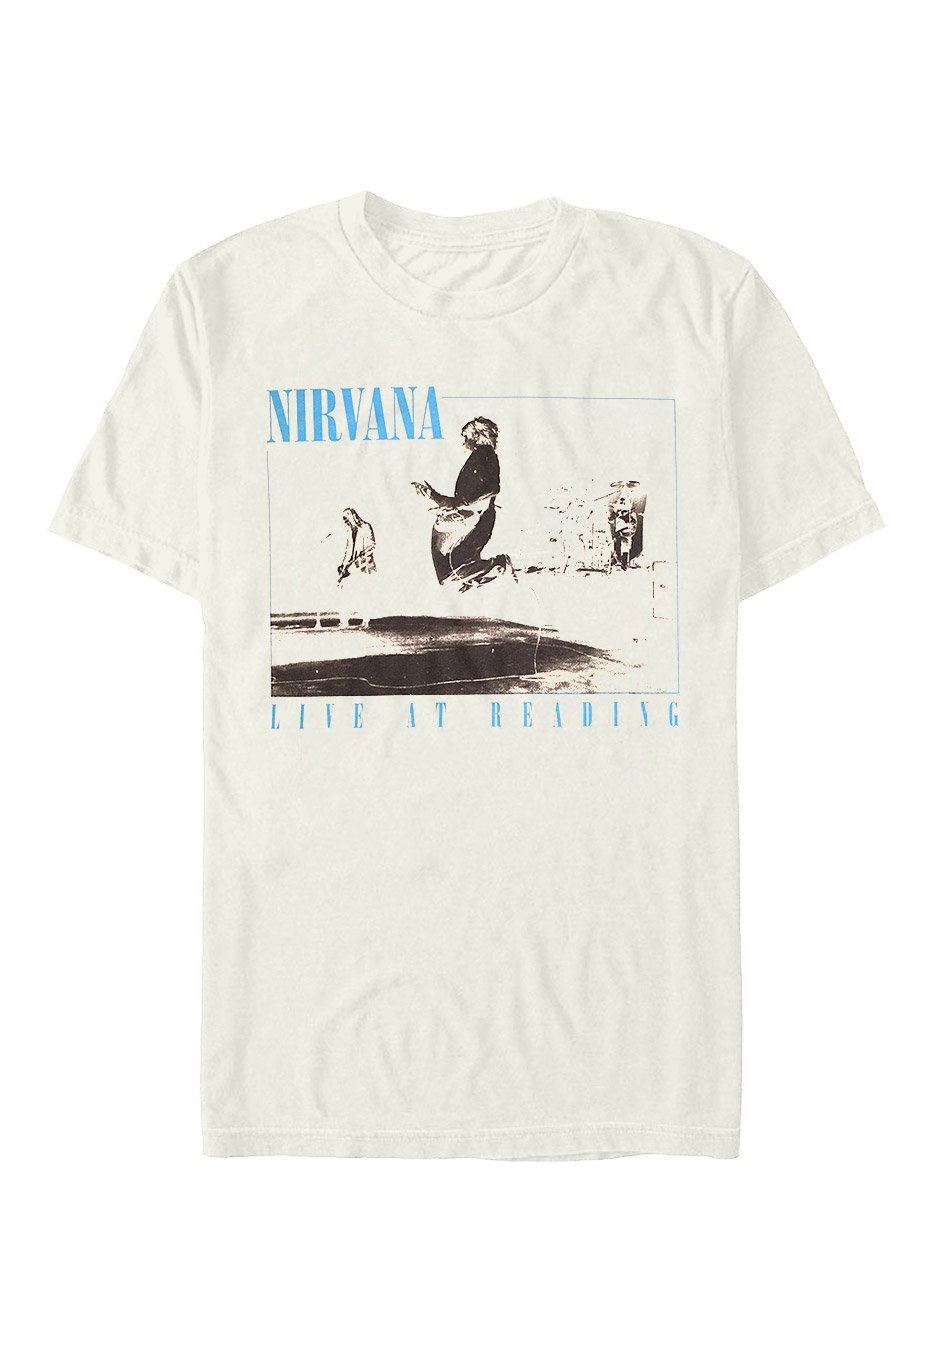 Nirvana - Live At Reading Sand - T-Shirt